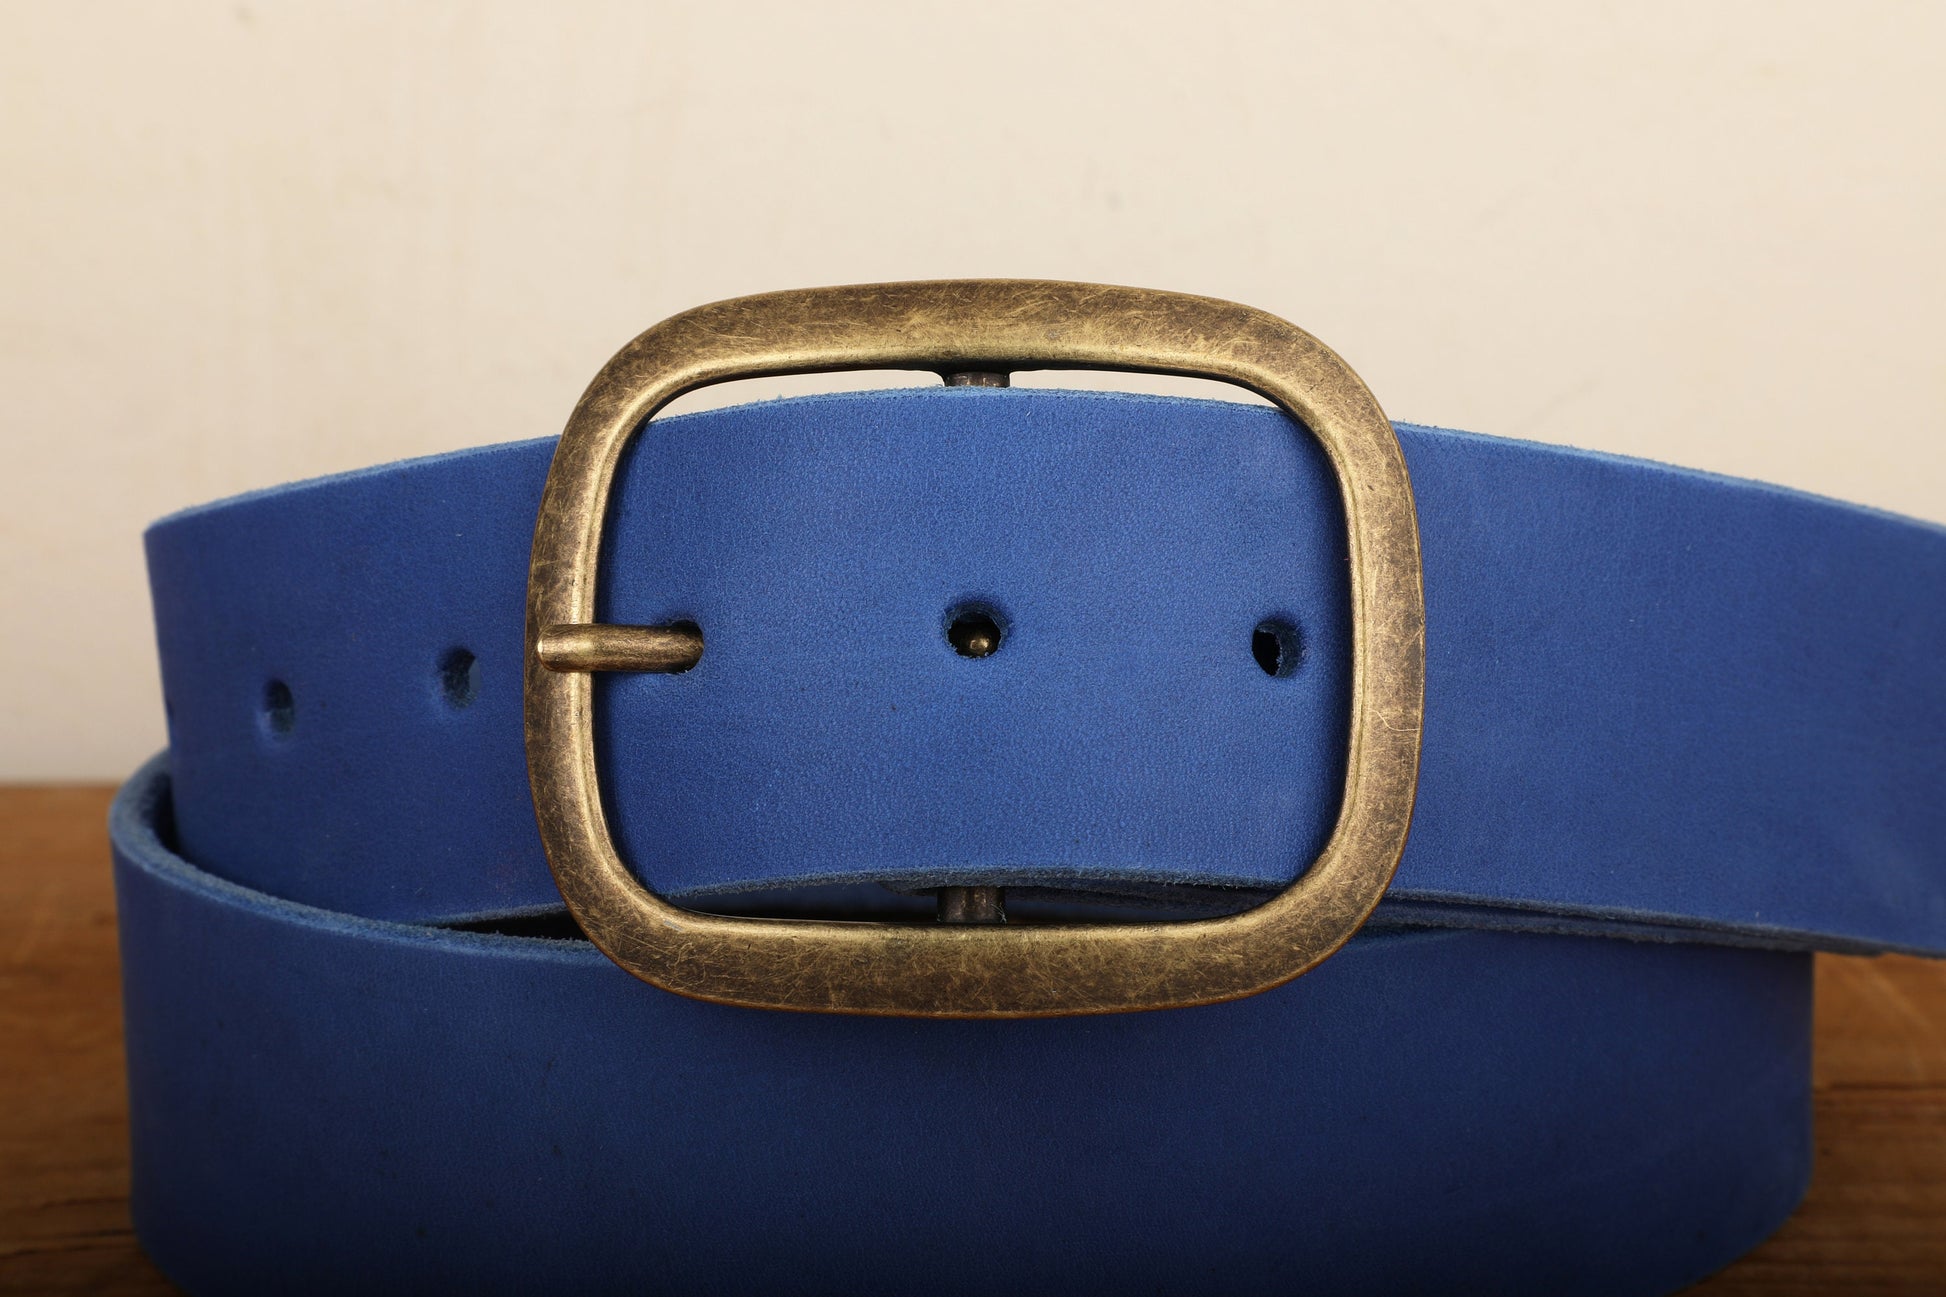 a close up of a blue belt on a wooden surface